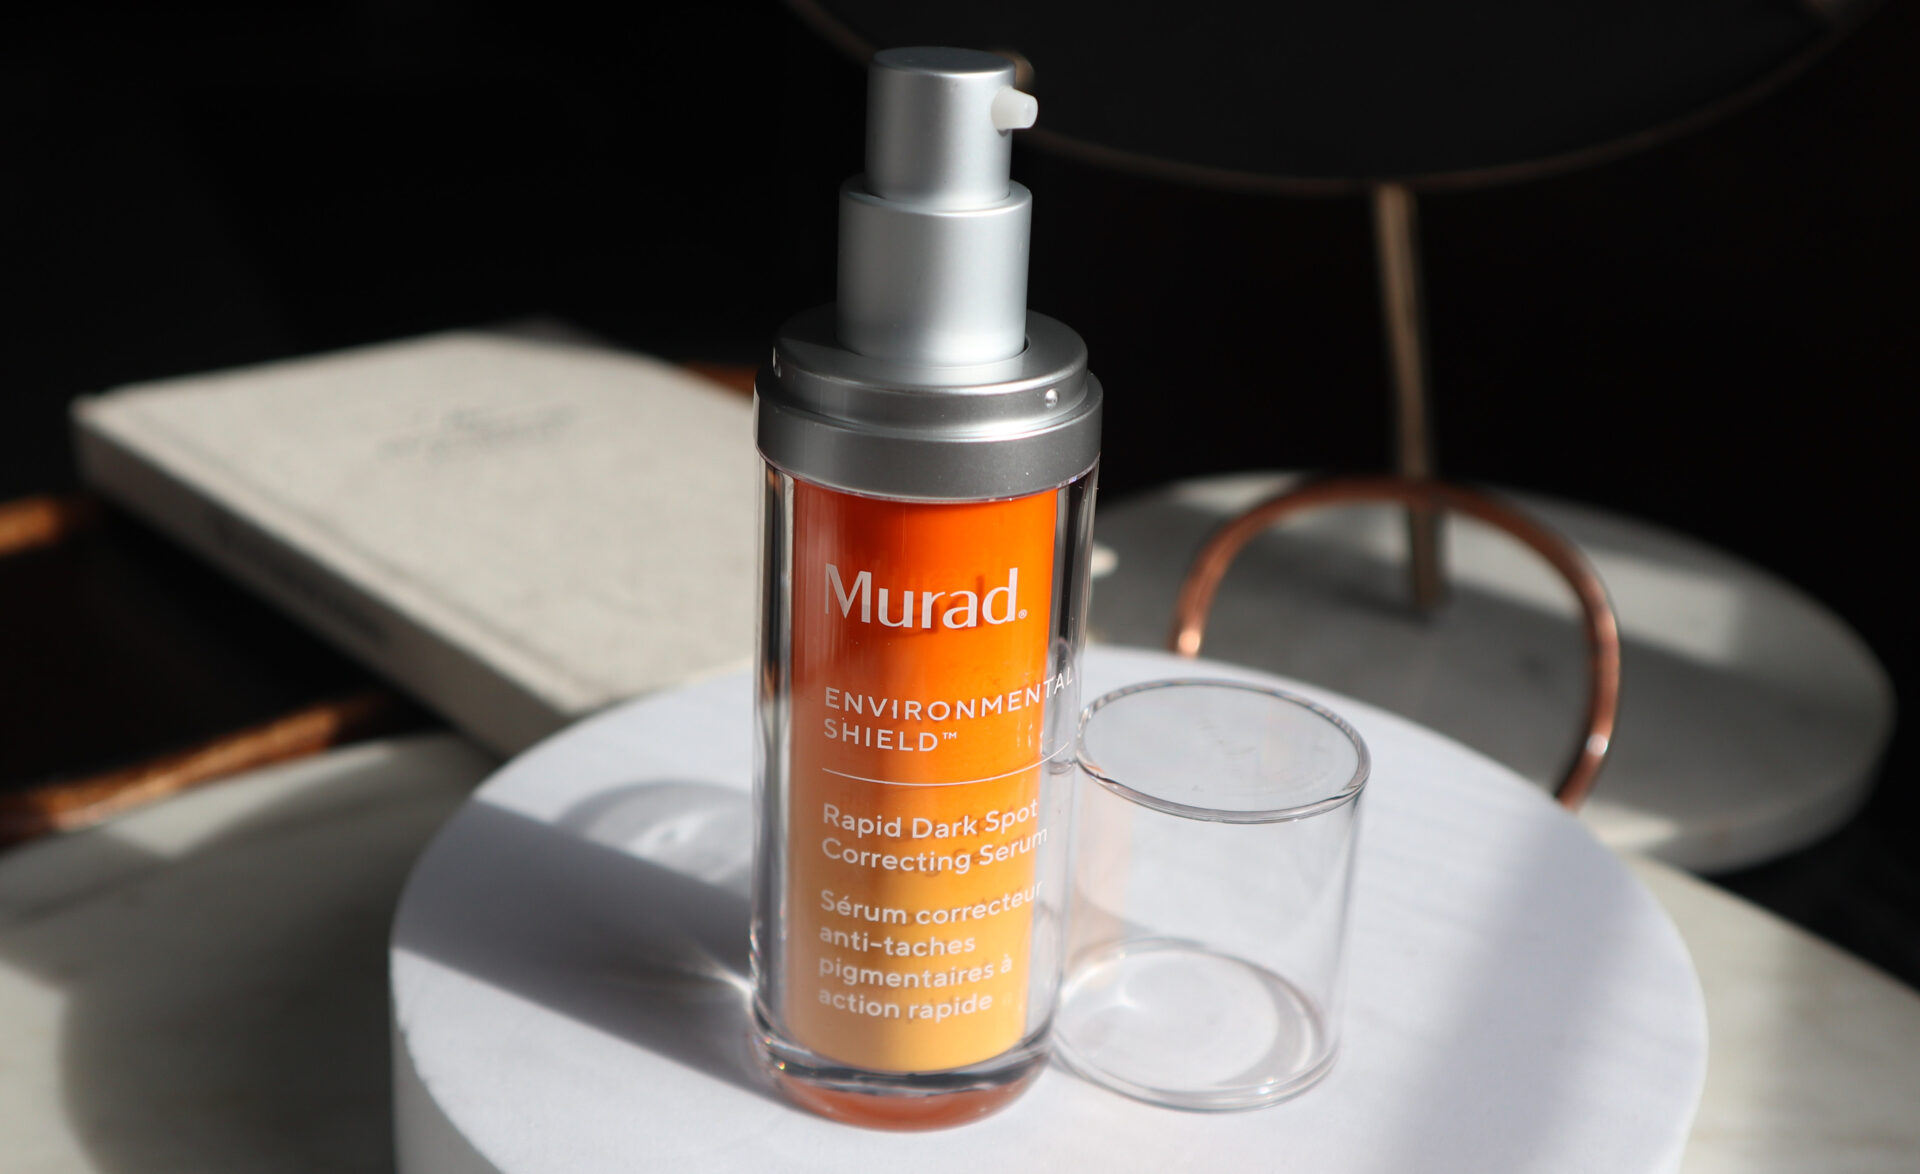 Murad Environmental Shield Rapid Dark Spot Correcting Serum Review The Velvet Life 3012